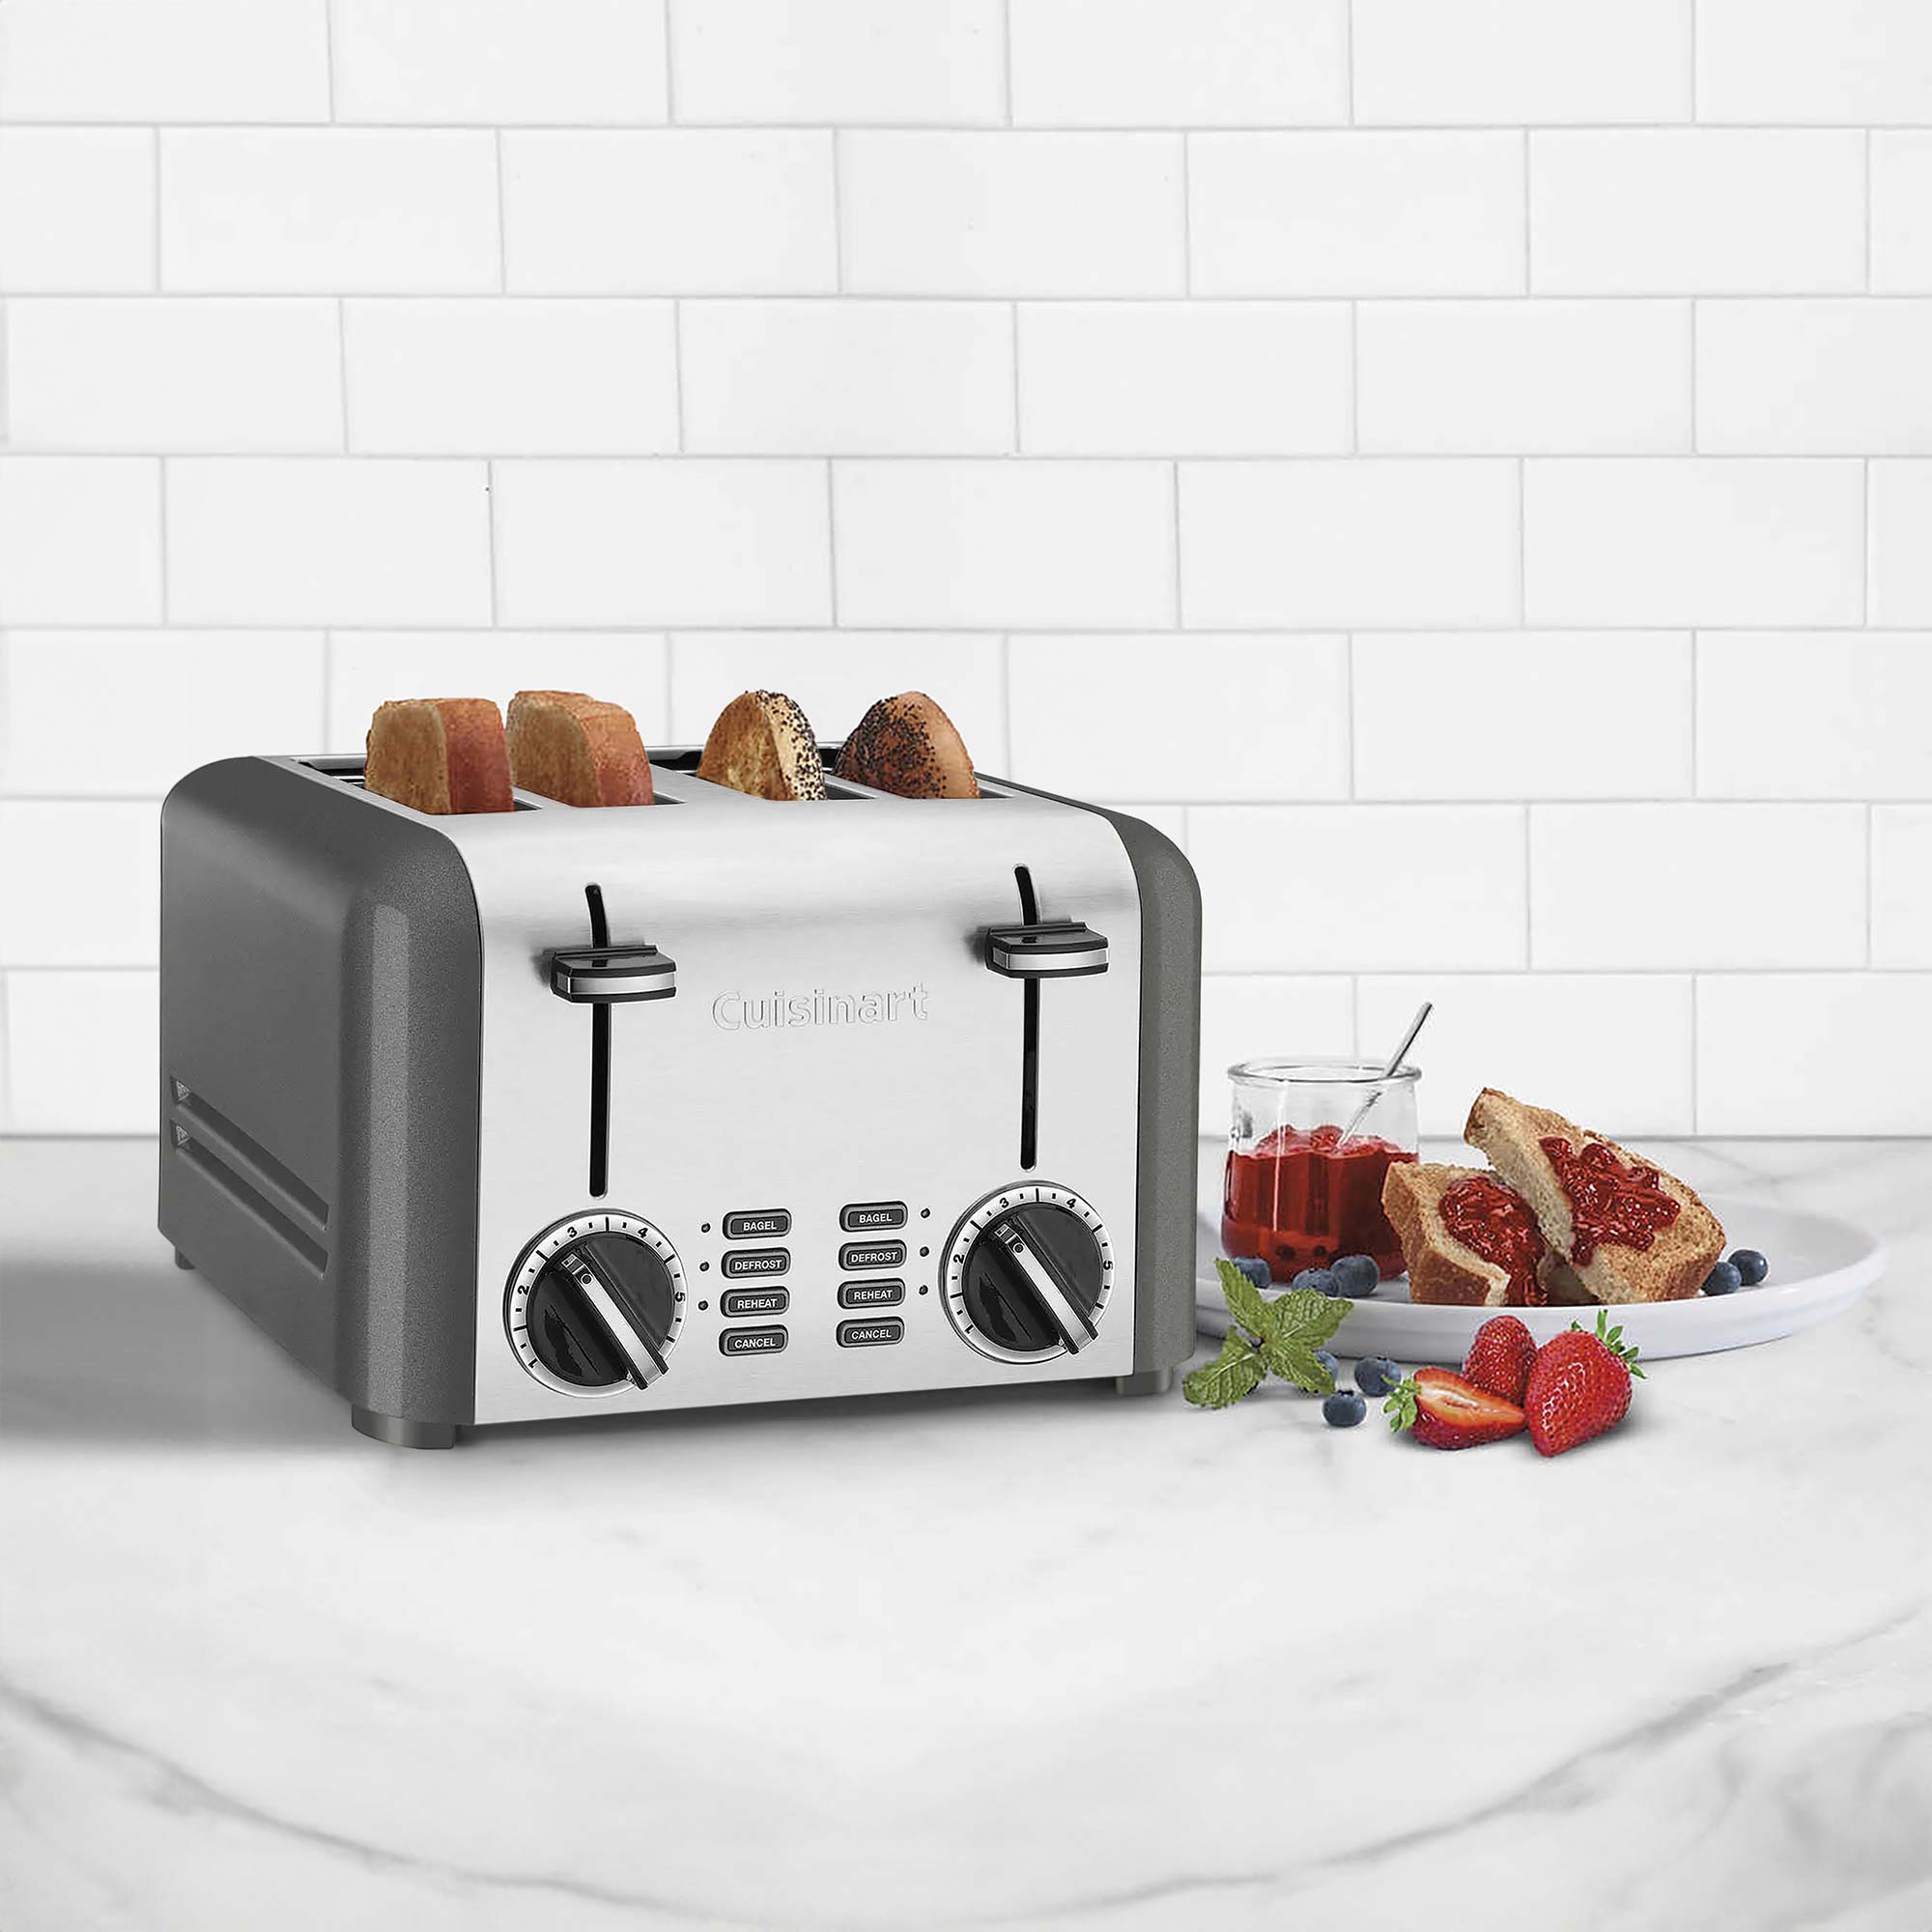 Cuisinart Elements Toaster - 4 Slice